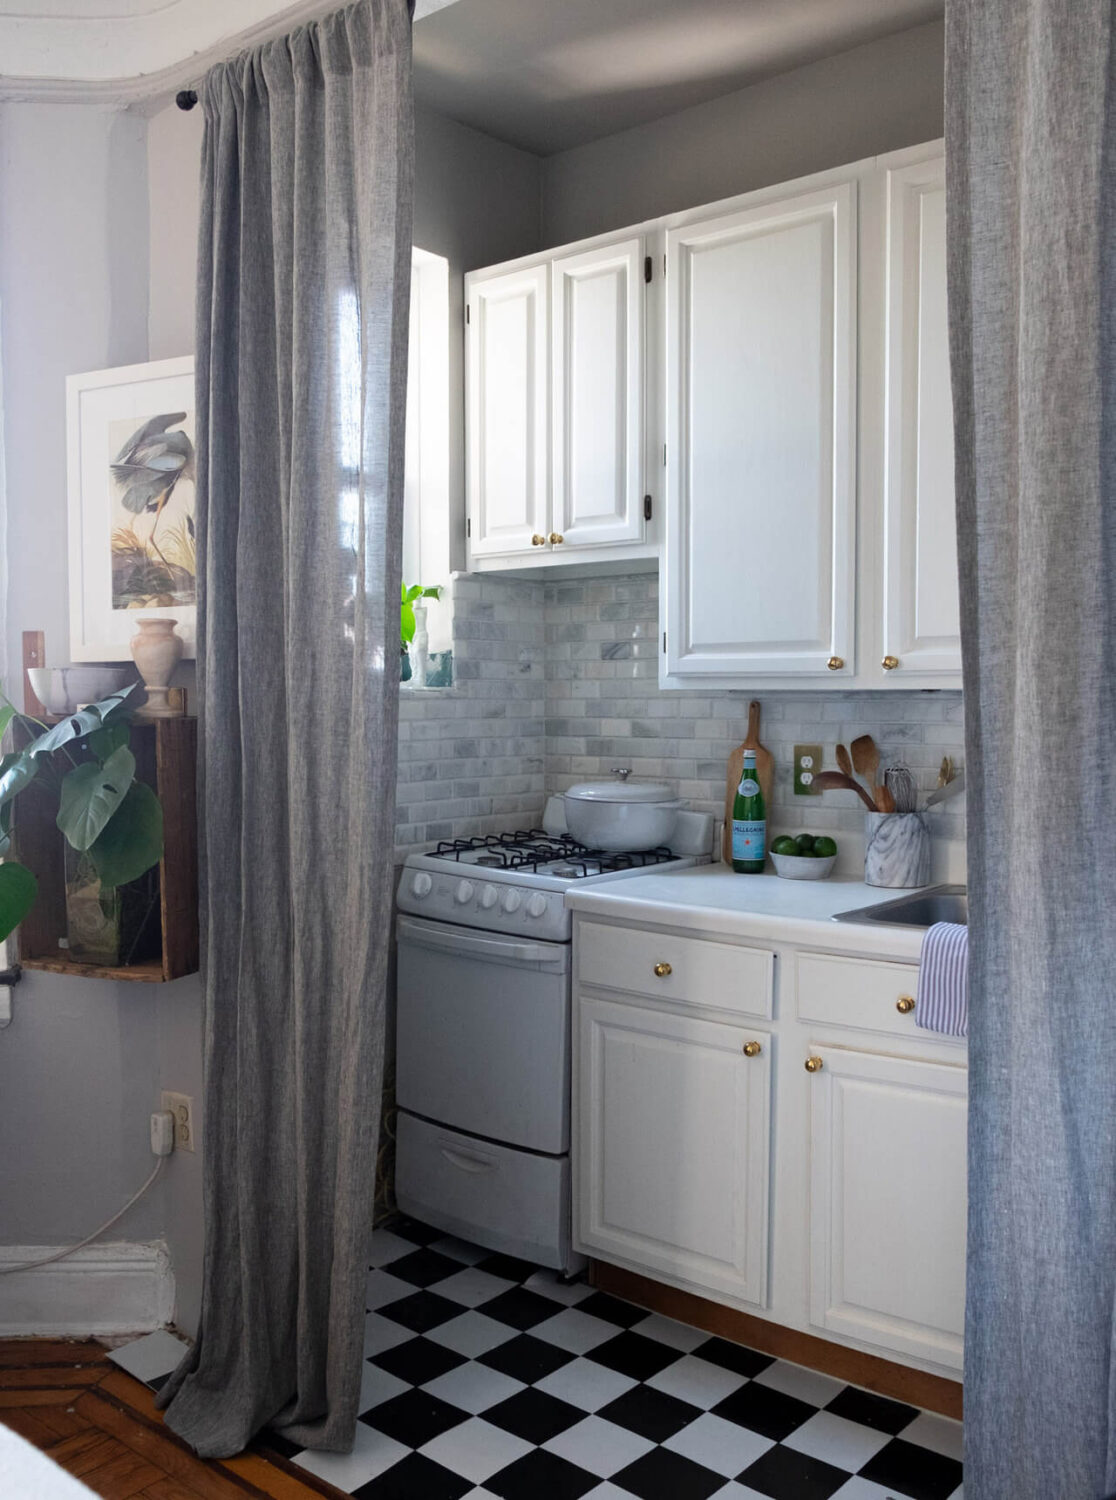 tiny-studio-gray-curtain-hides-kitchen-nordroom